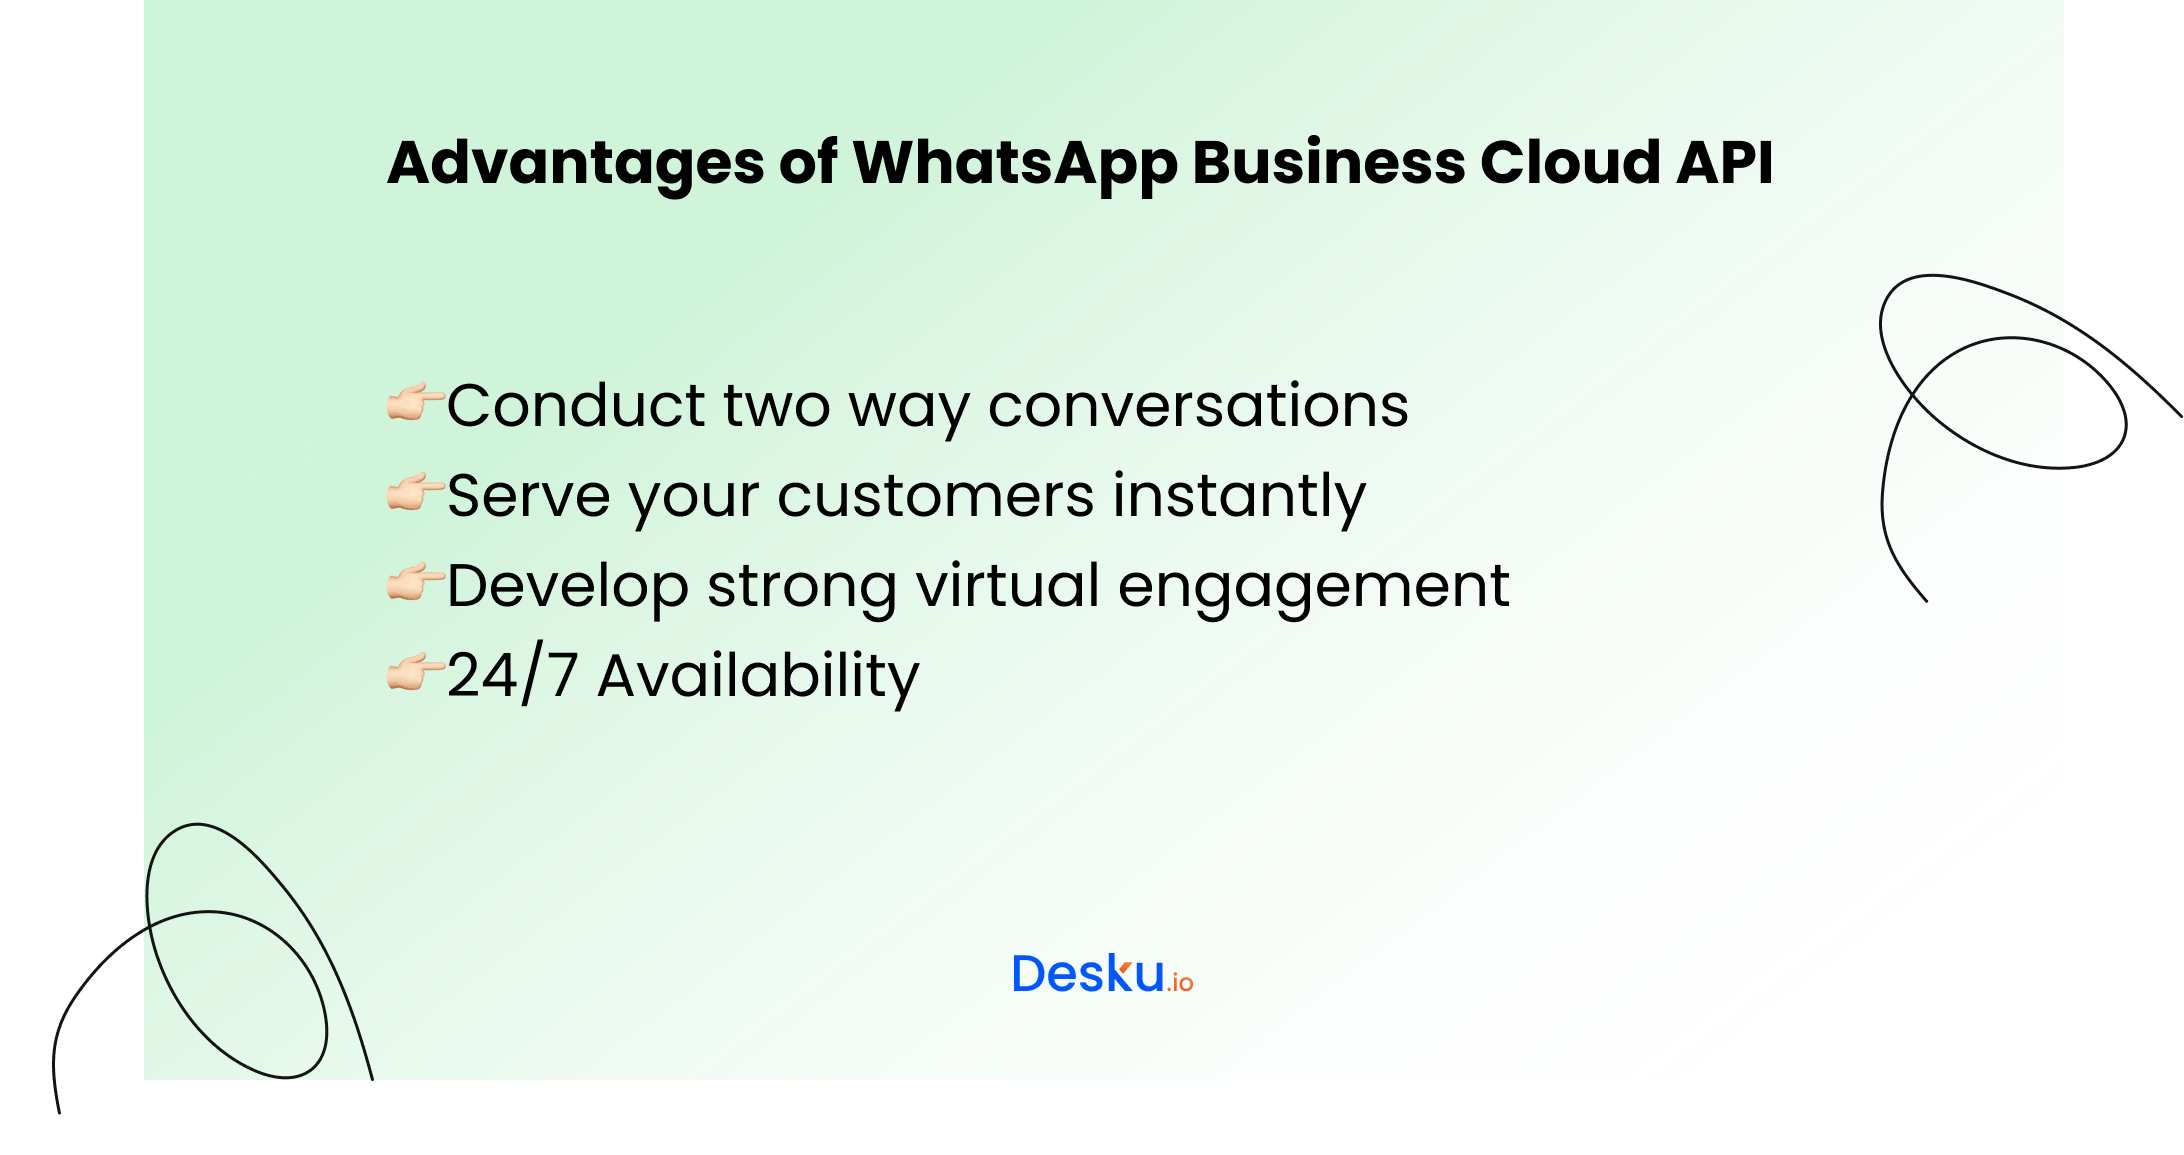 Whatsapp business cloud api